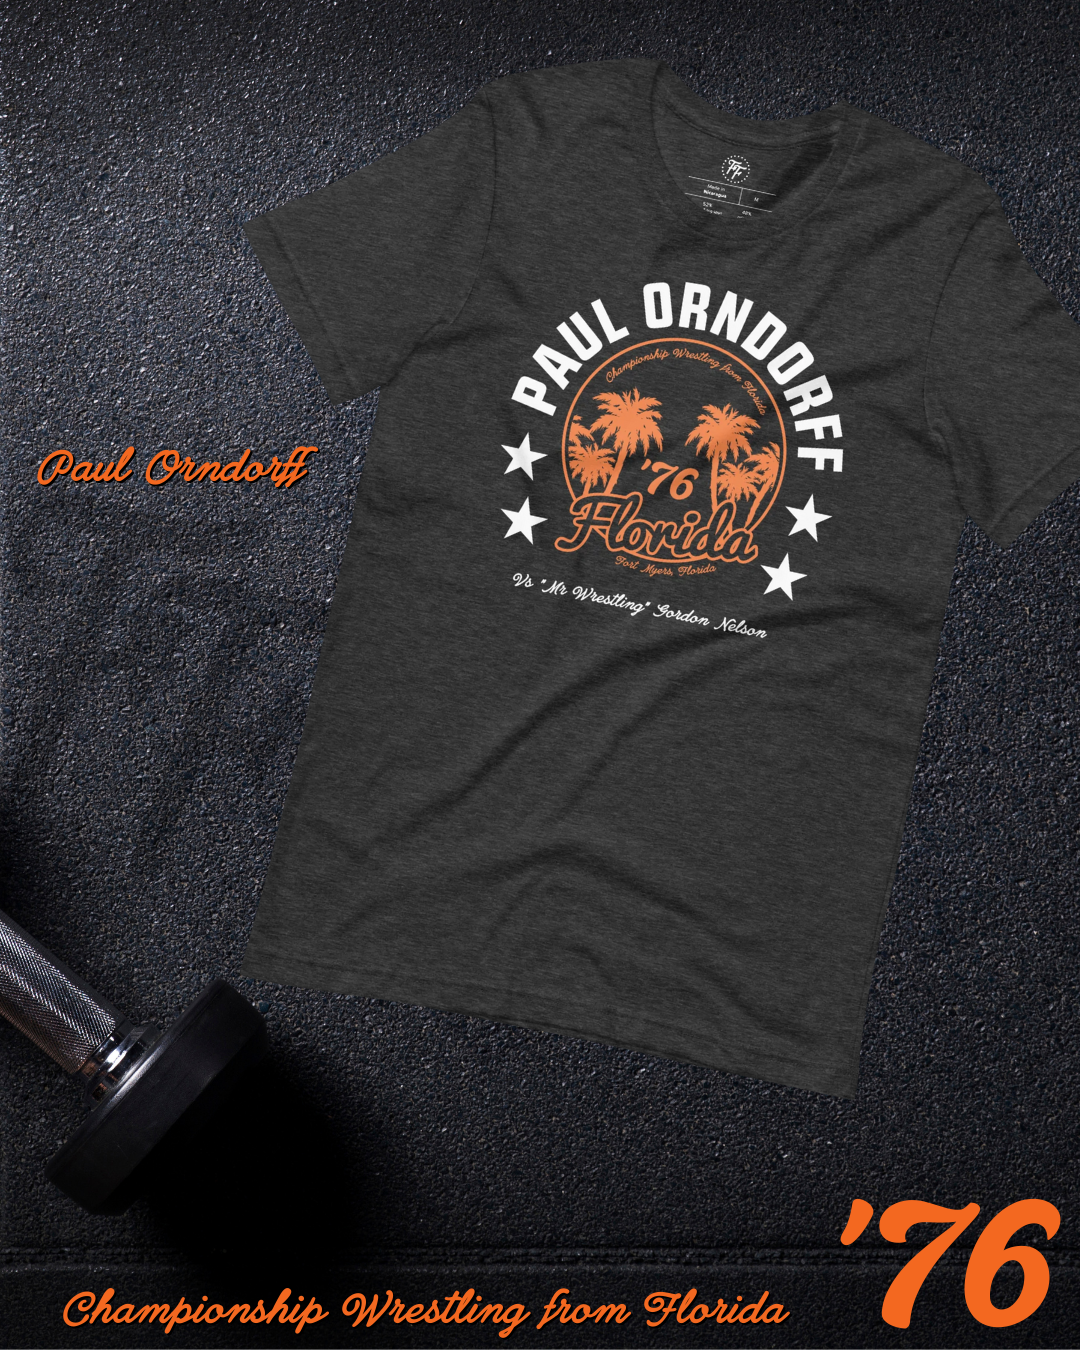 Paul Orndorff - Fort Myers '76 Shirt